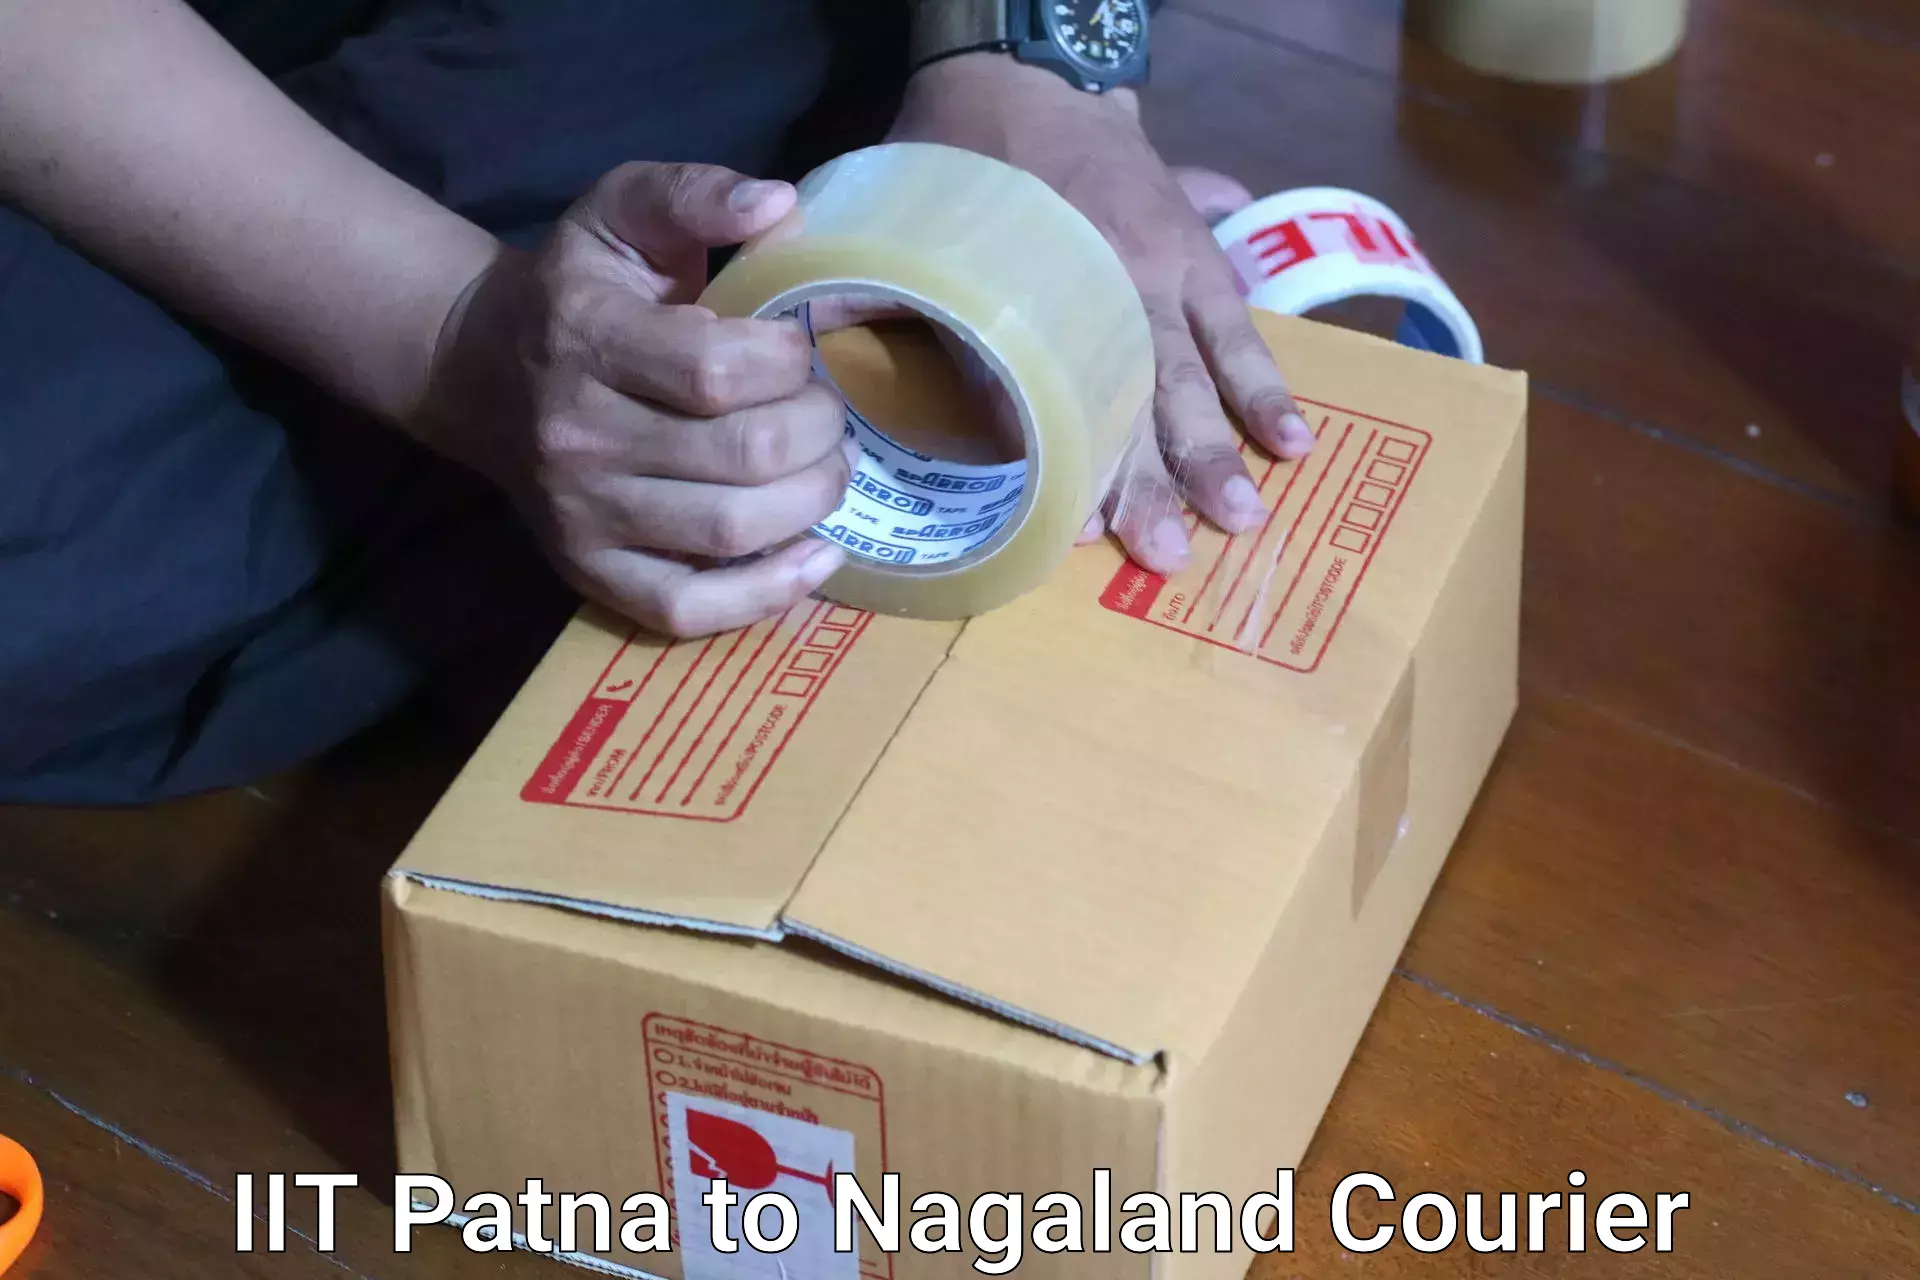 Baggage transport network IIT Patna to Nagaland